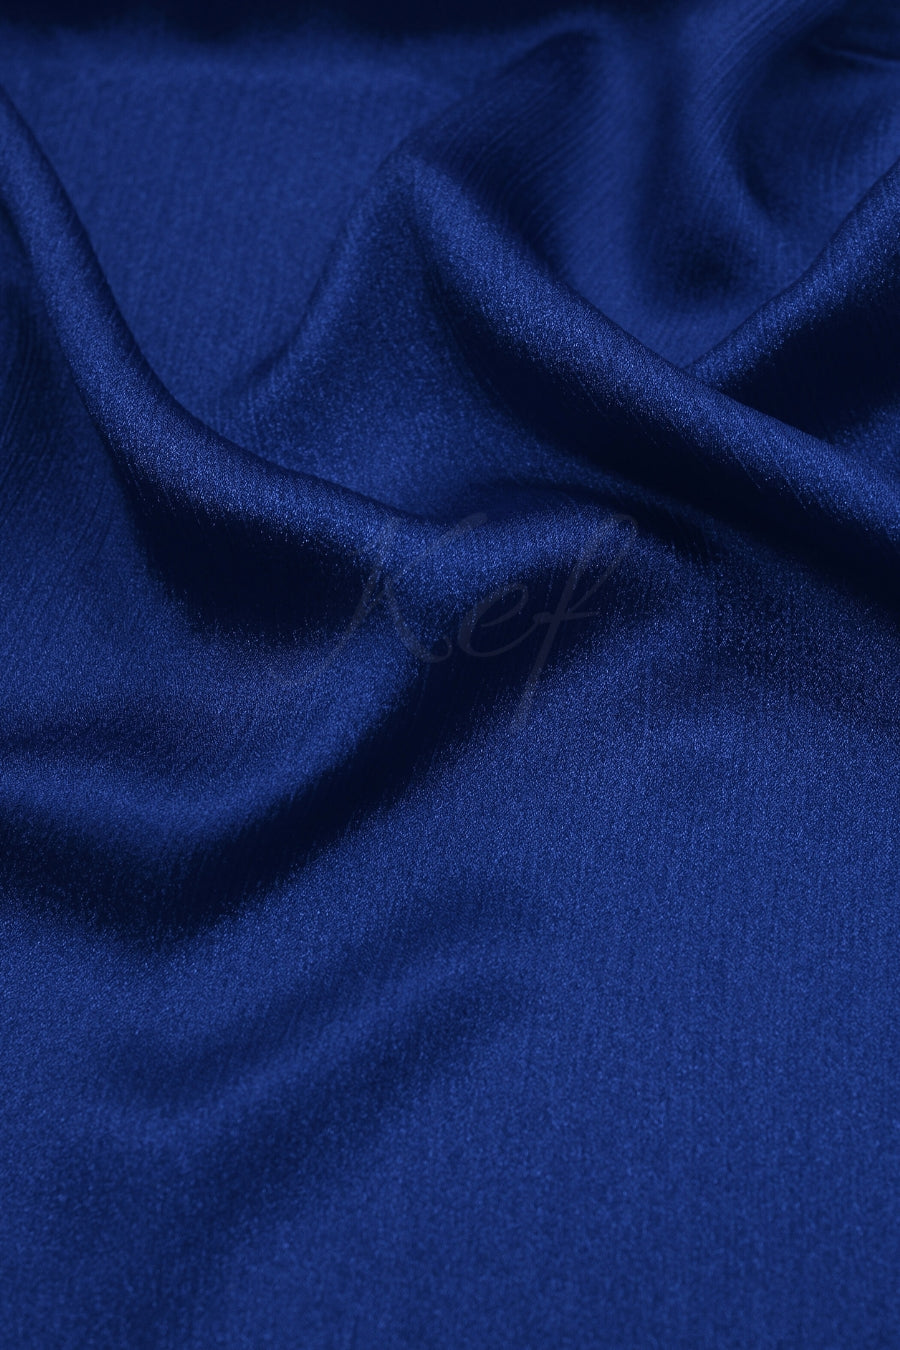 Crinkle Chiffon Hijab - Cornflower Blue (Shimmer)